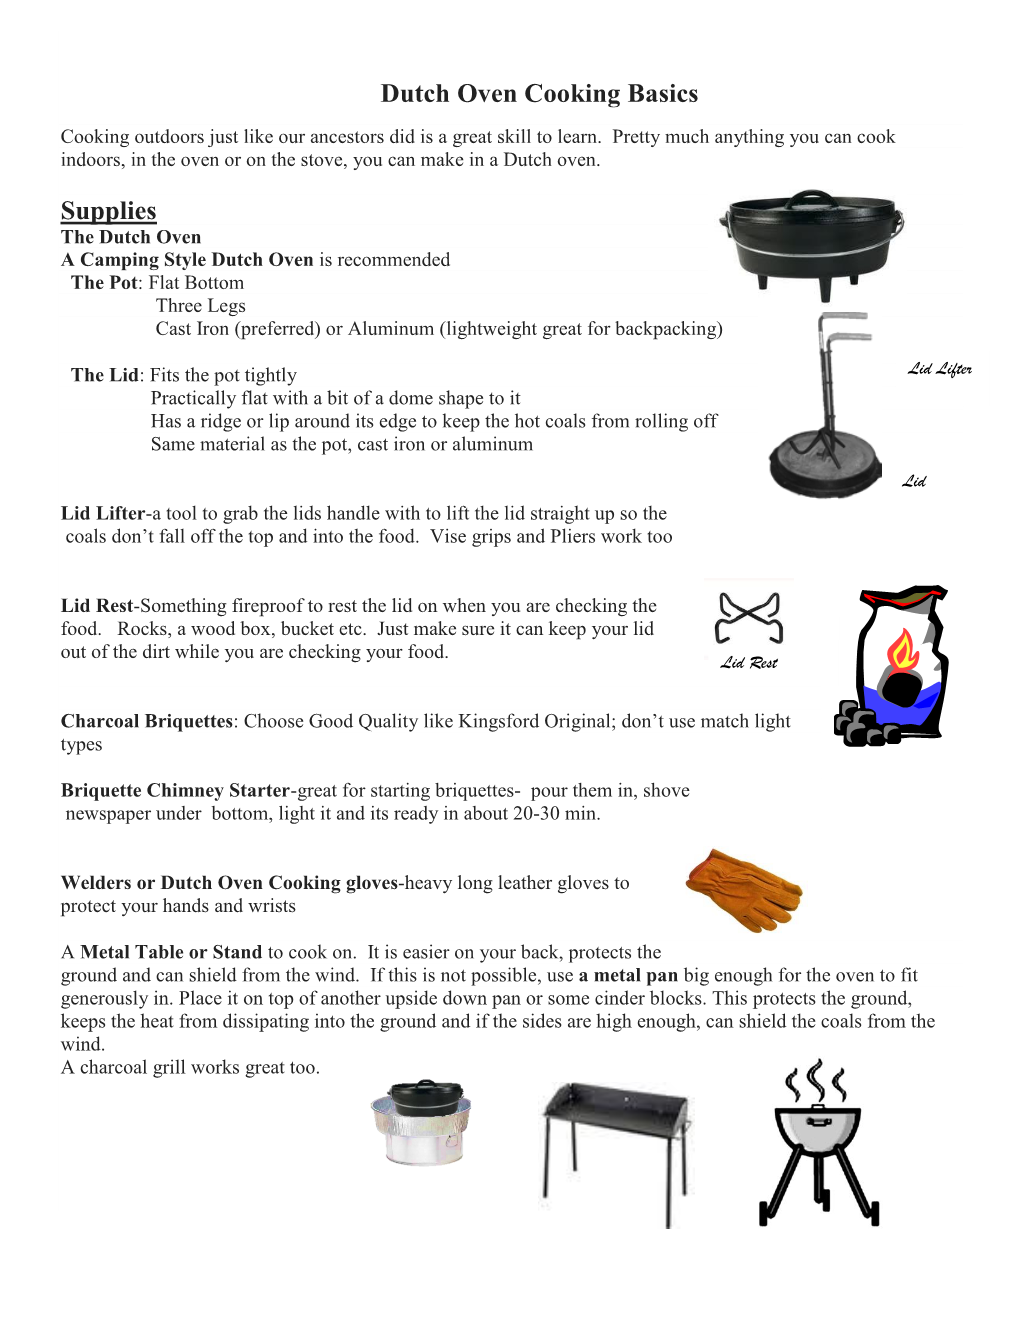 Dutch Oven Cooking Basics Supplies